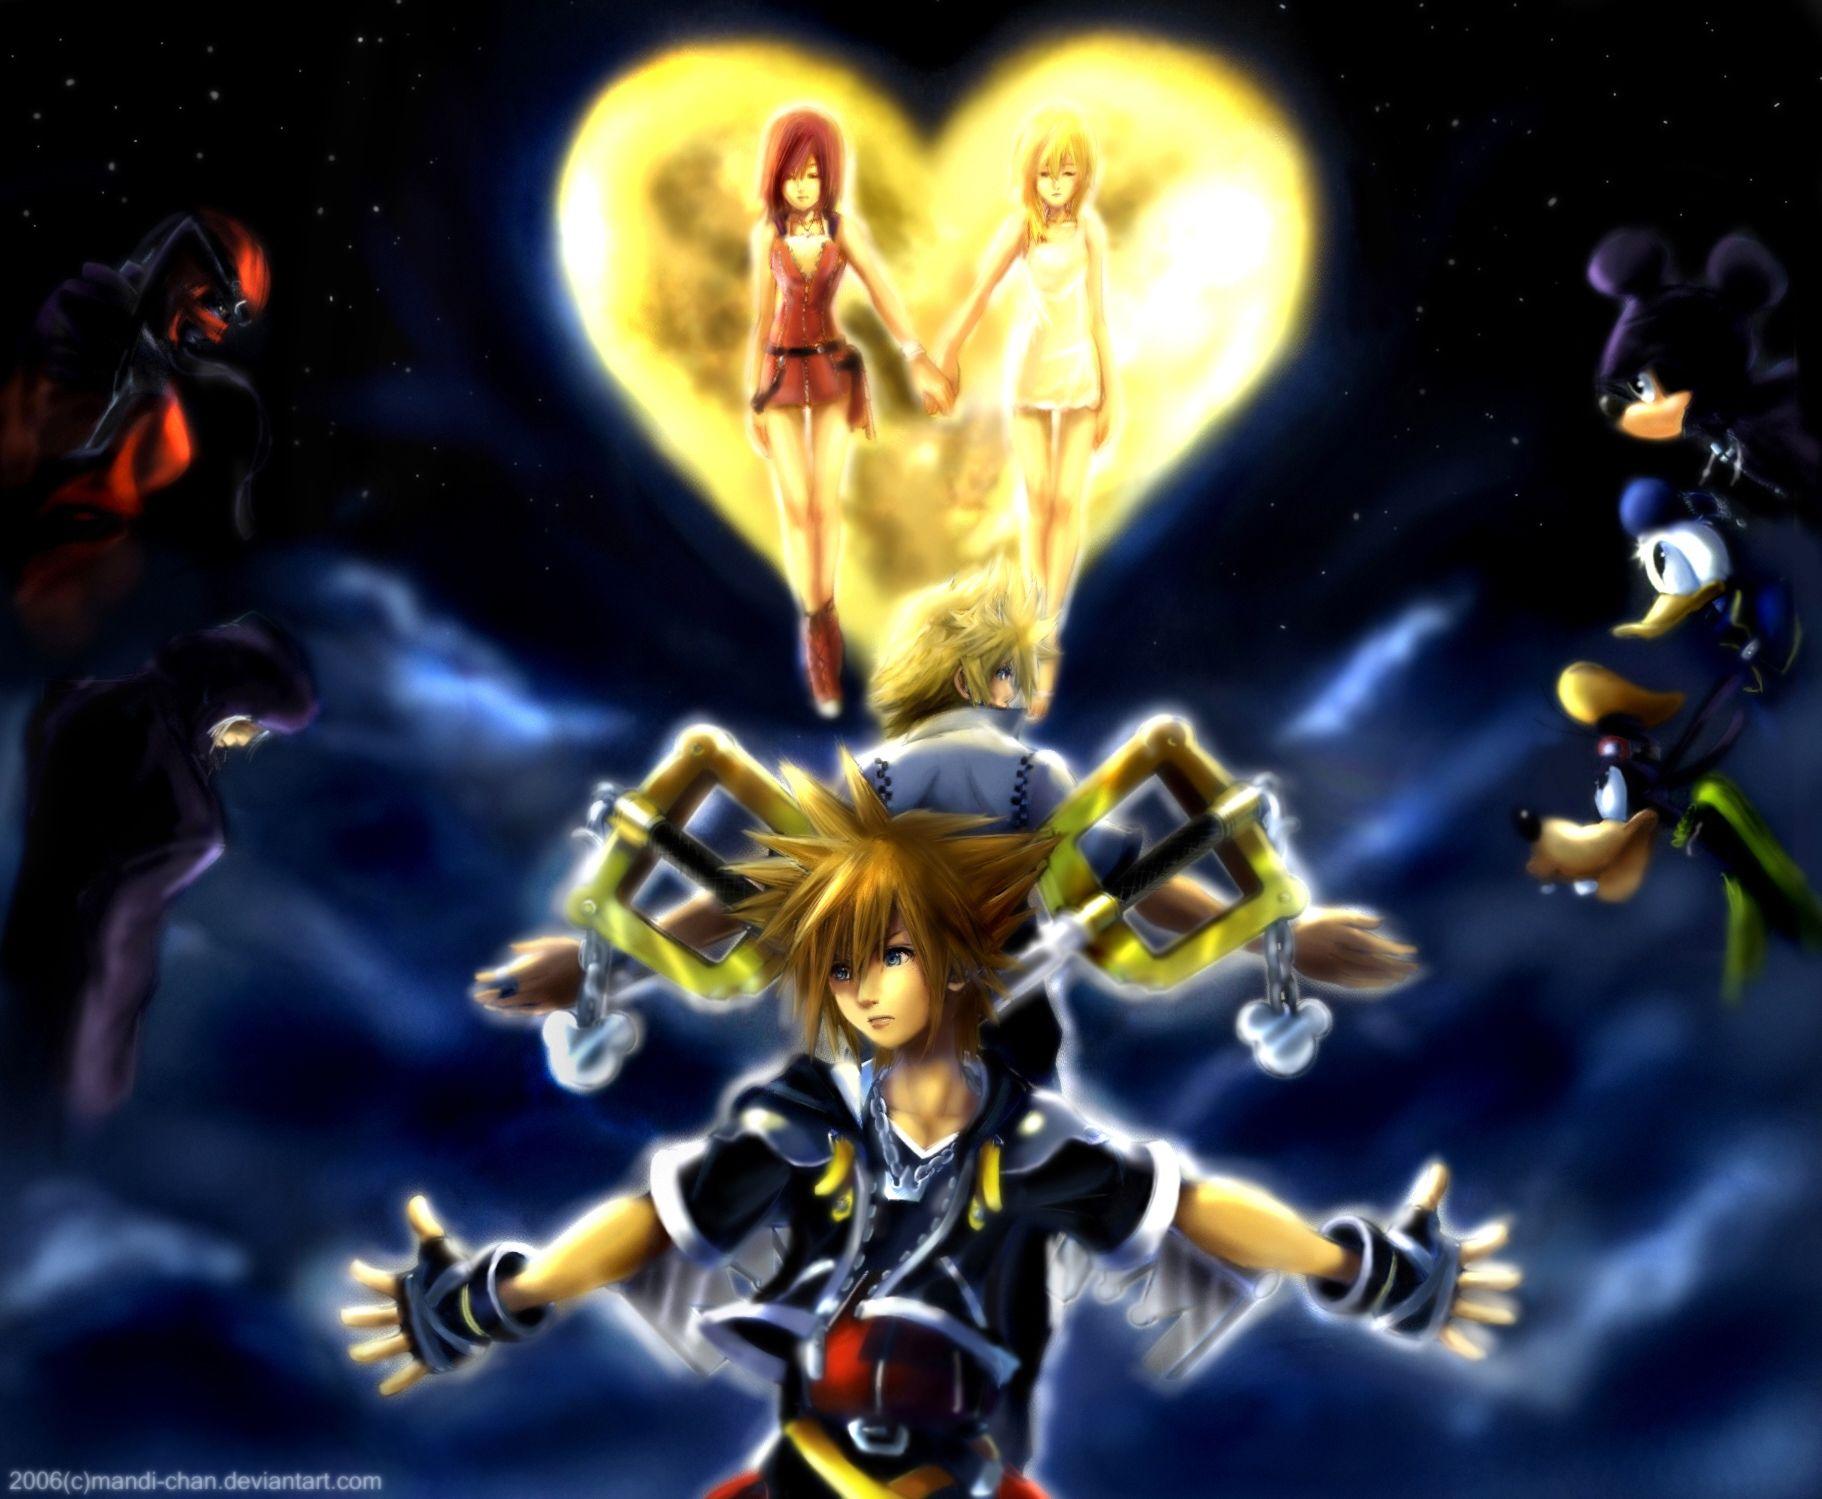 Sora Kingdom Hearts 2 Wallpaper. The Vampire Diaries